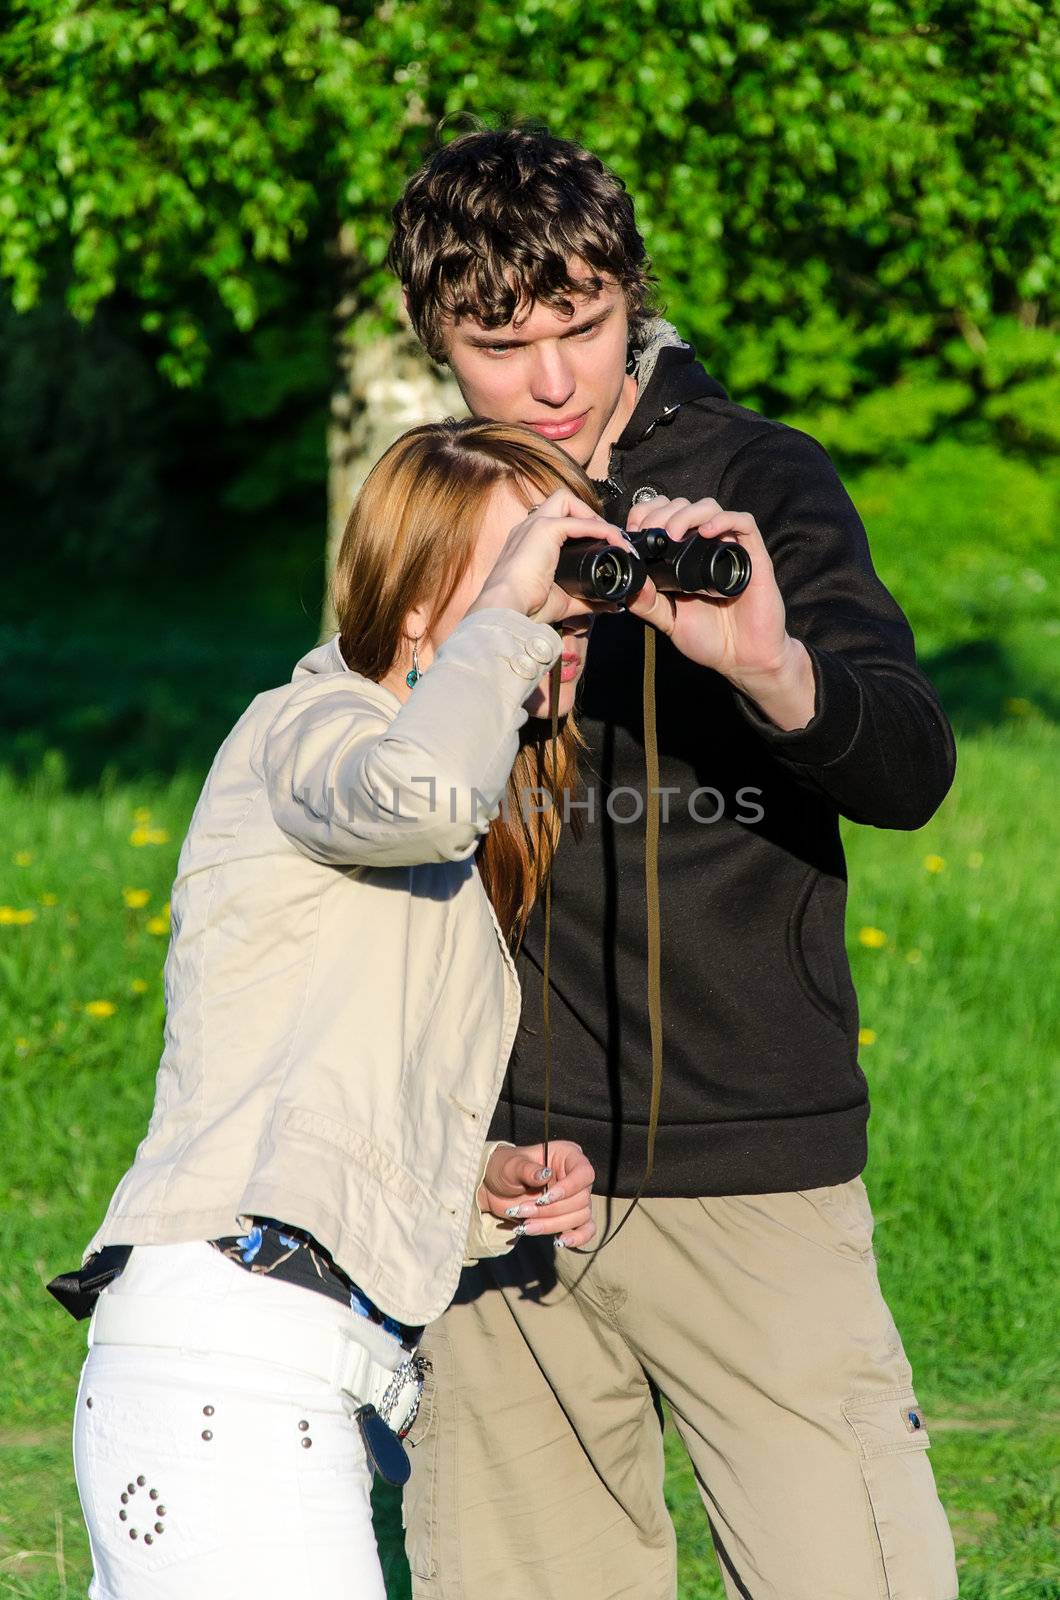 Attractive young woman looking through binoculars